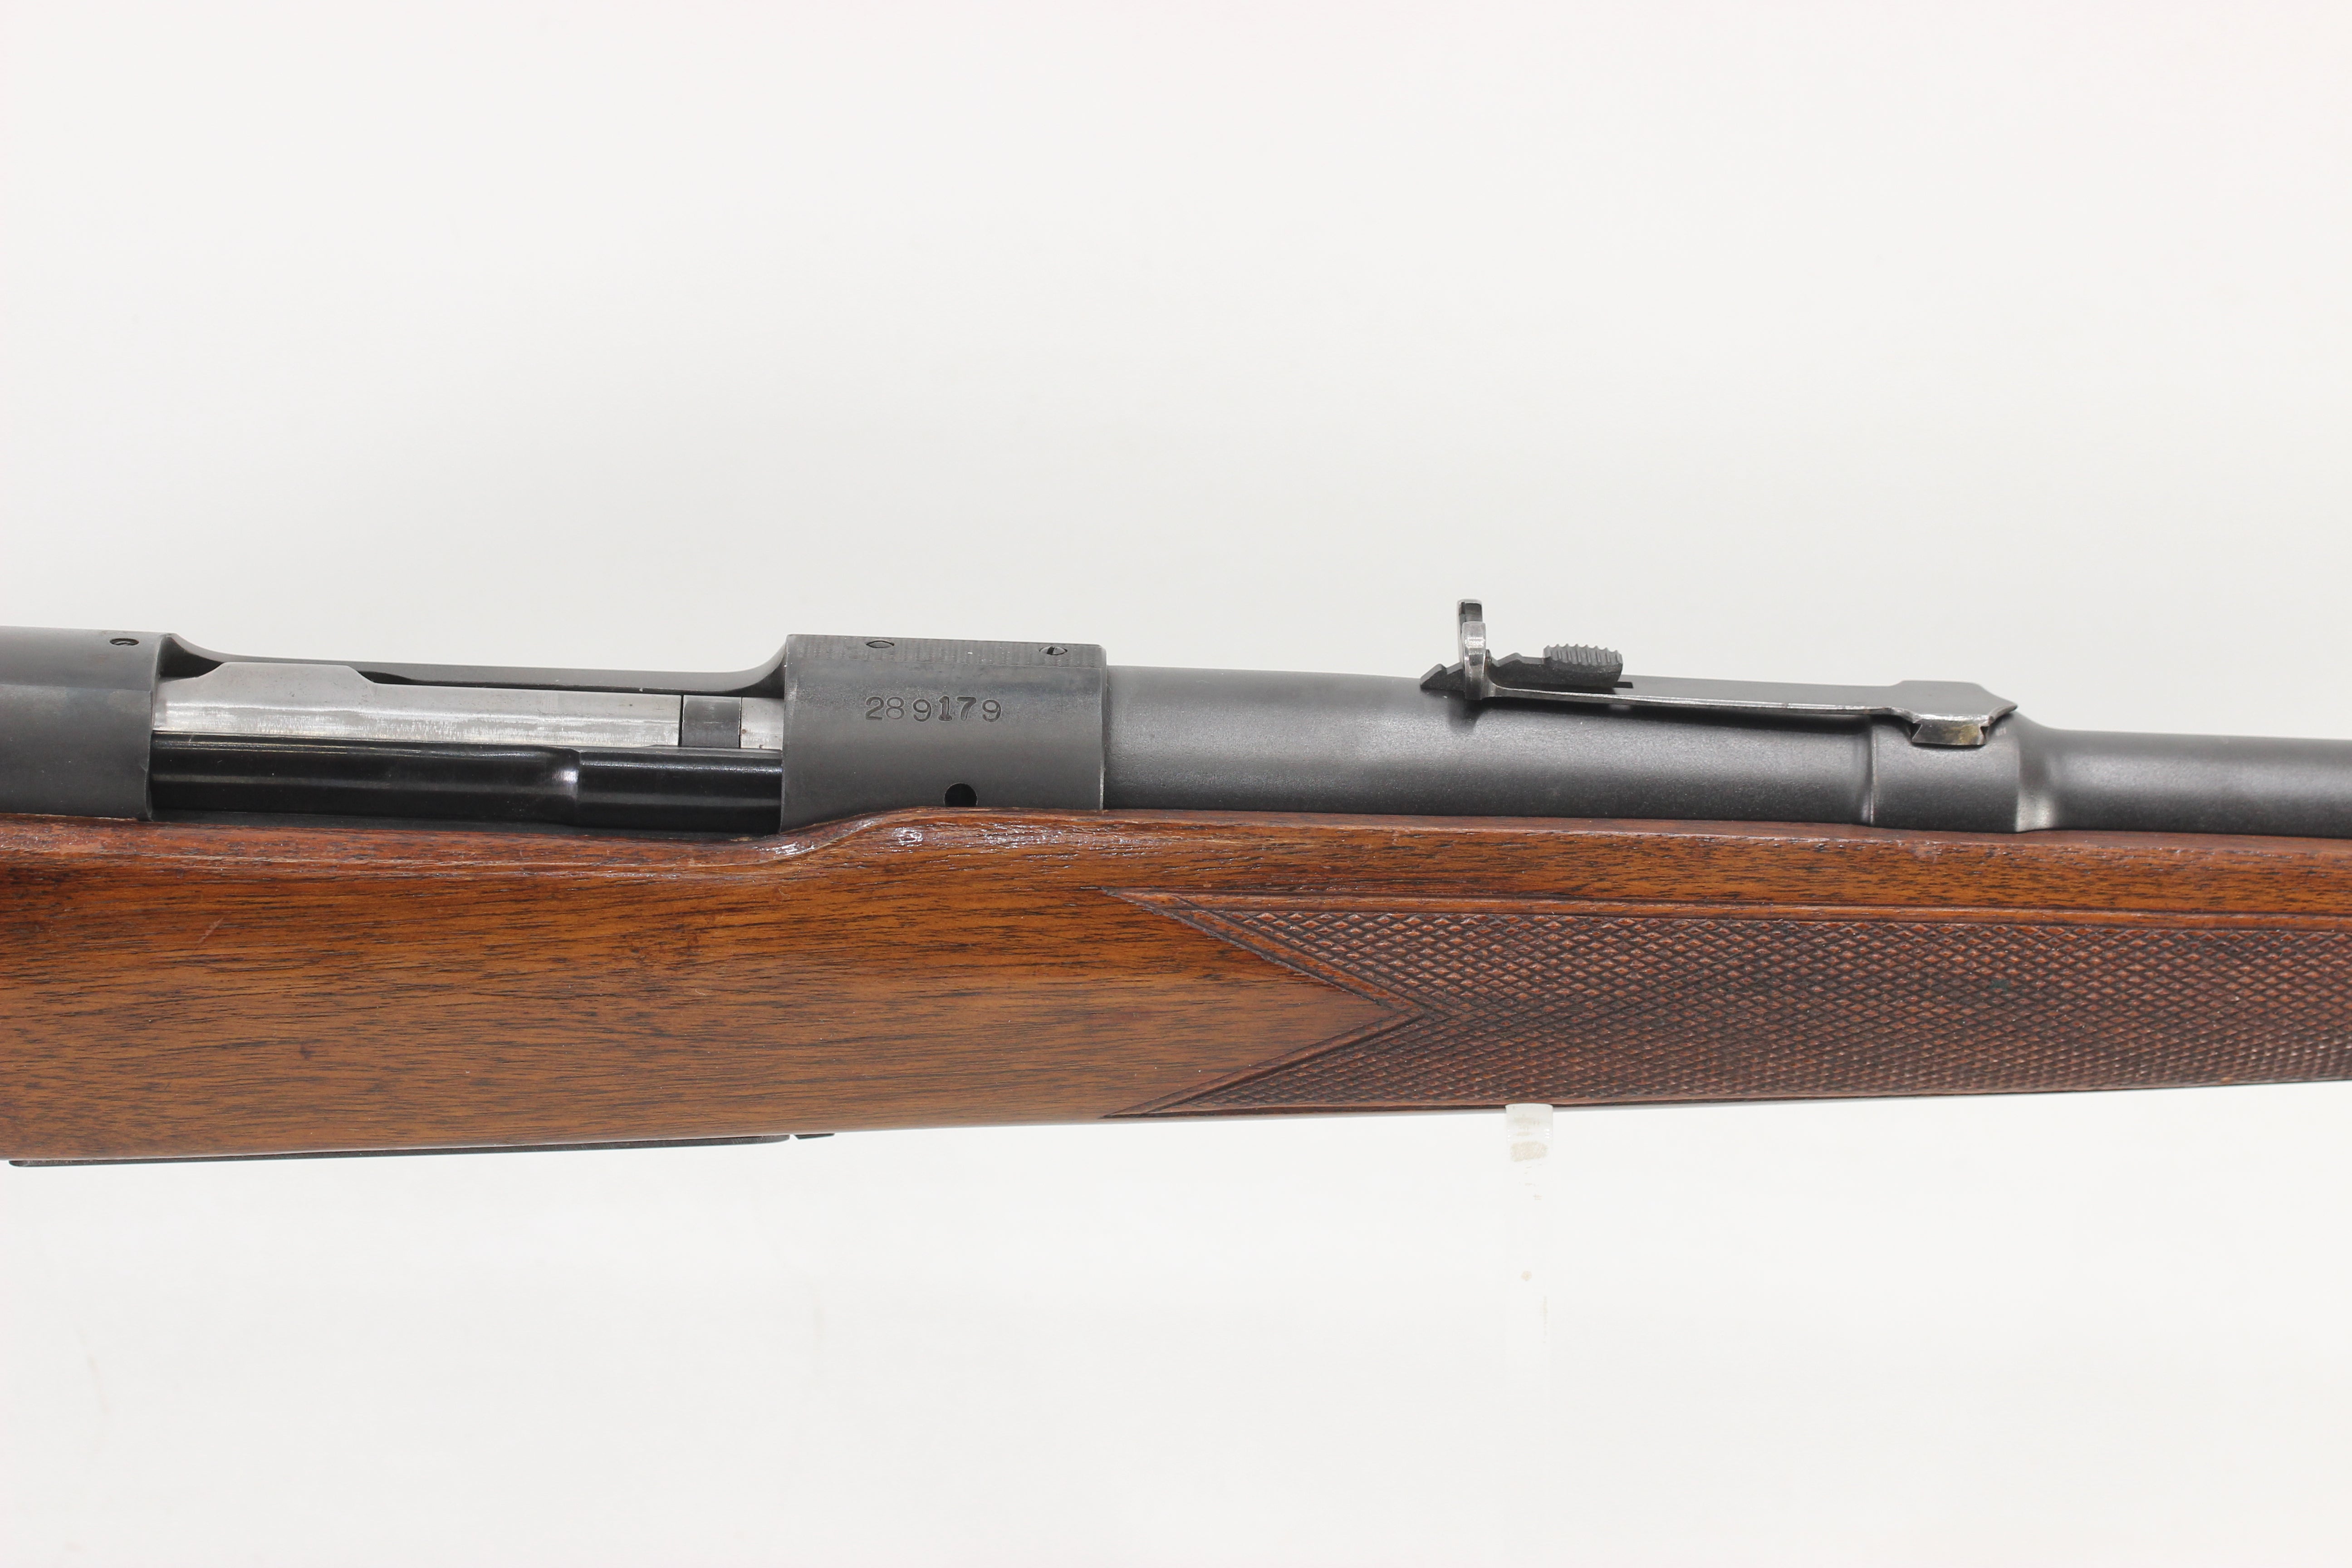 .220 Swift Standard Rifle - 1954